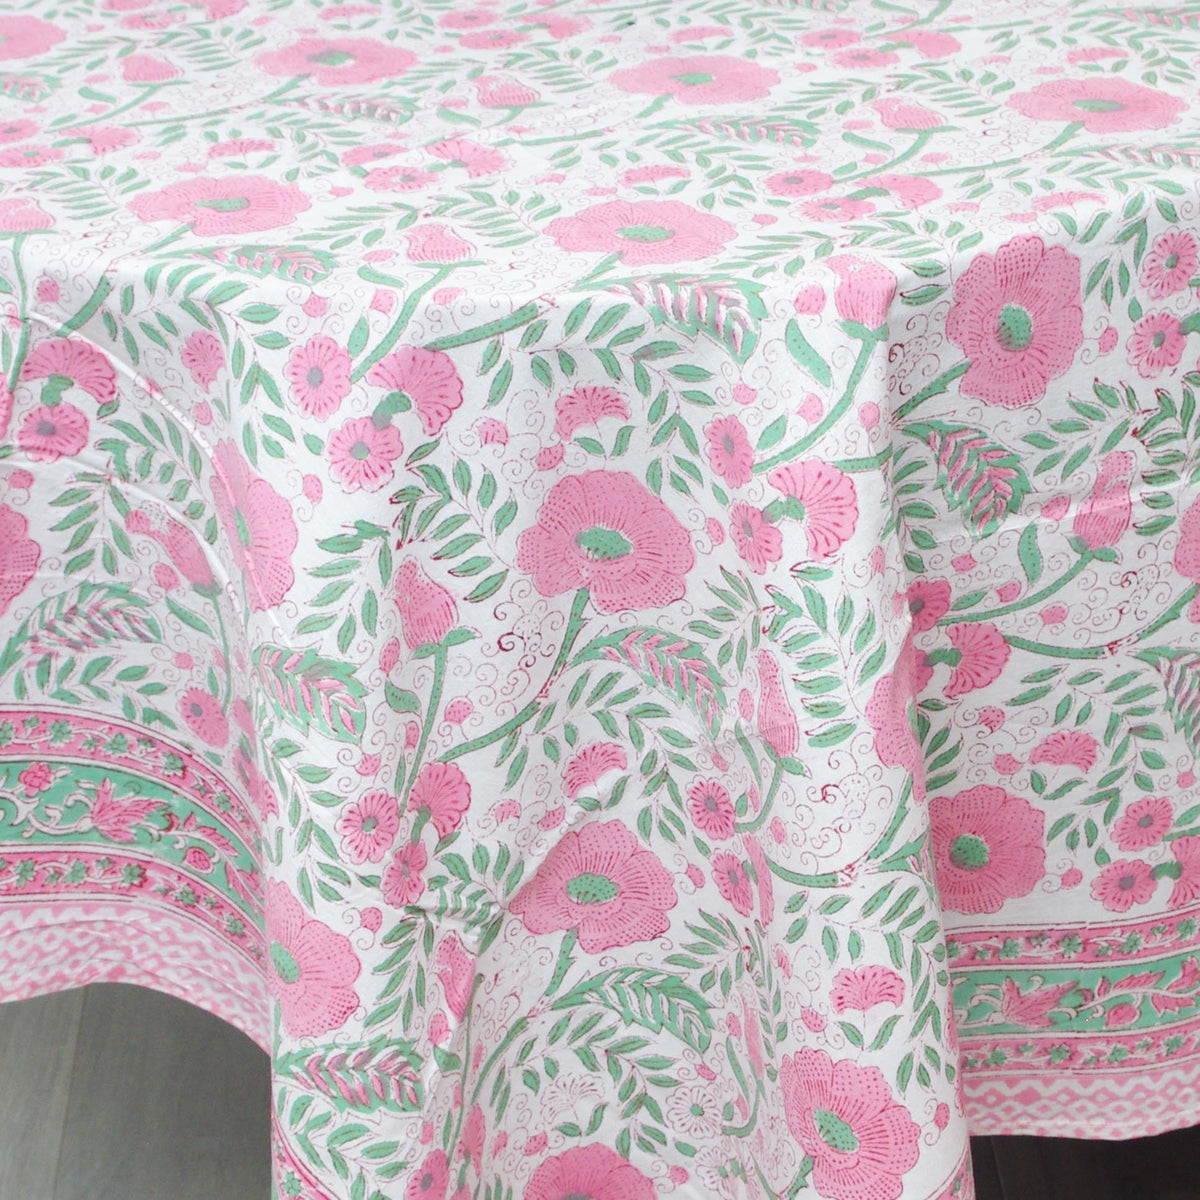 Rosa Blumengarten-Block gedruckte rechteckige Tischdecke Tischdecke